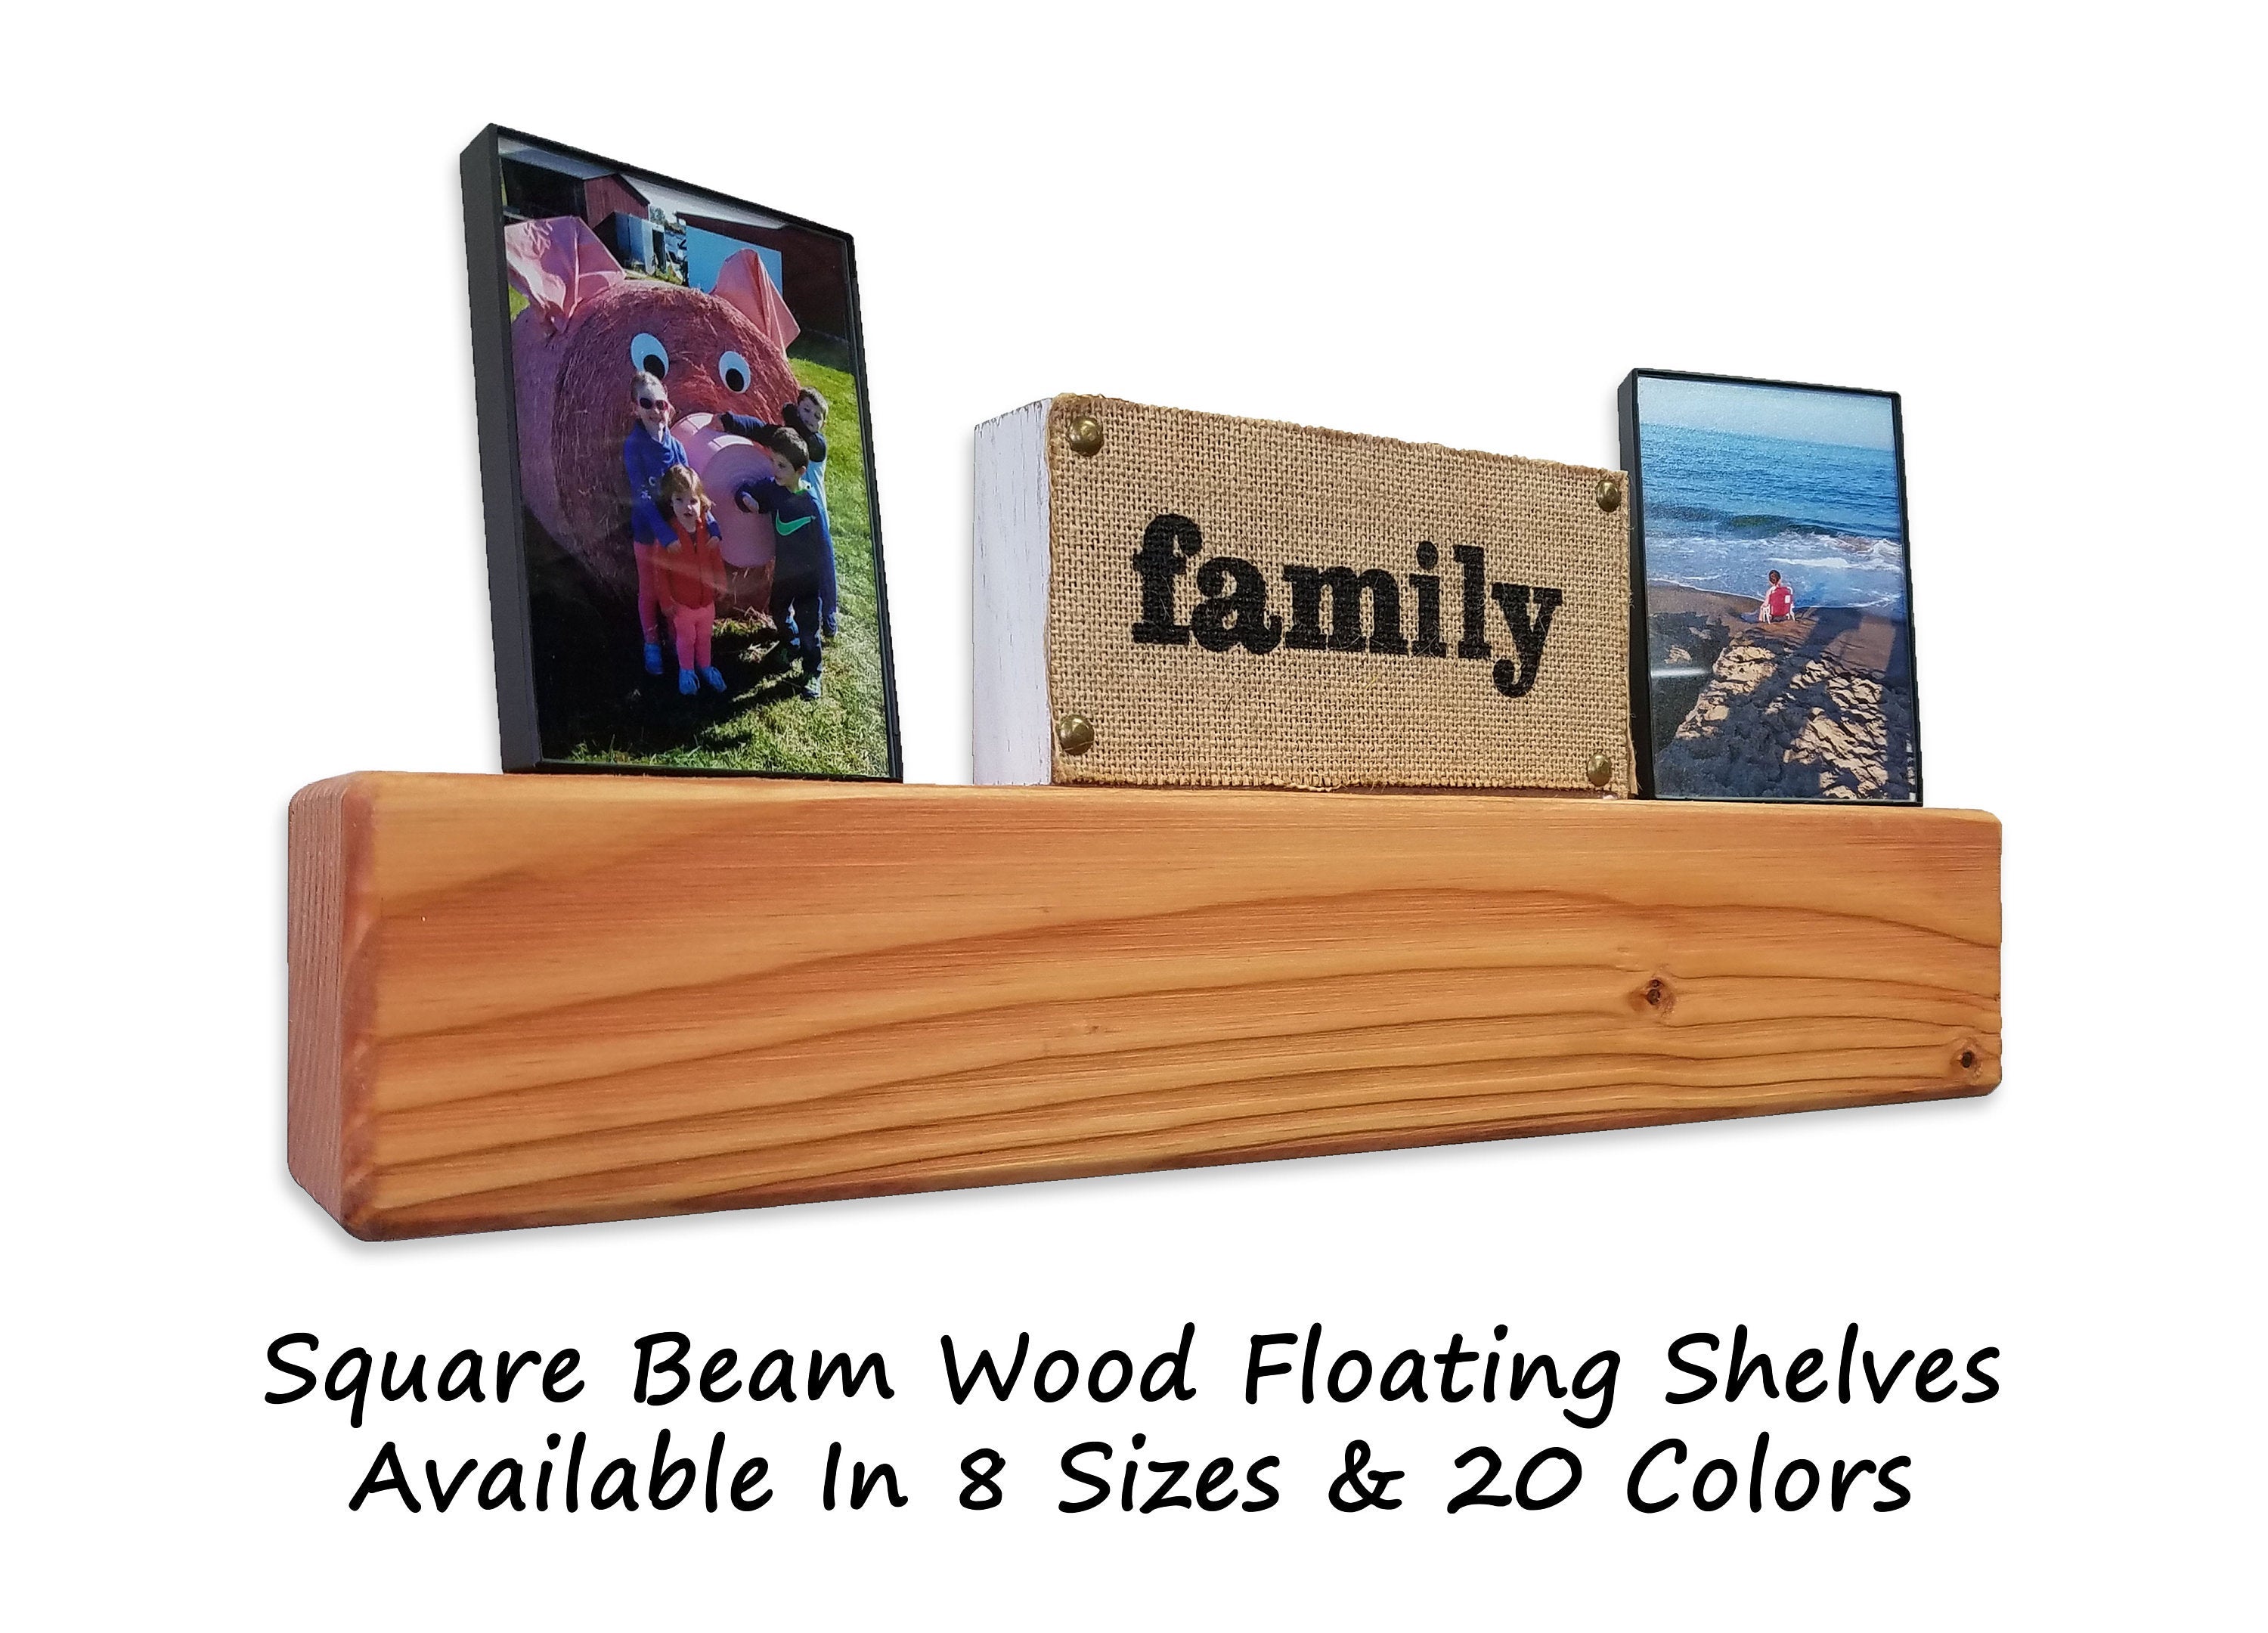 Square Beam Solid Wood Floating Shelves - Renewed Decor & Storage